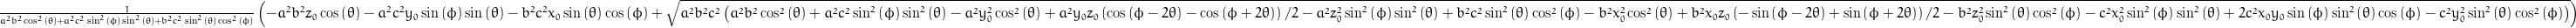 \frac{1}{a^{2} b^{2} \cos^{2}{\left (\theta \right )} + a^{2} c^{2} \sin^{2}{\left (\phi \right )} \sin^{2}{\left (\theta \right )} + b^{2} c^{2} \sin^{2}{\left (\theta \right )} \cos^{2}{\left (\phi \right )}} \left(- a^{2} b^{2} z_{0} \cos{\left (\theta \right )} - a^{2} c^{2} y_{0} \sin{\left (\phi \right )} \sin{\left (\theta \right )} - b^{2} c^{2} x_{0} \sin{\left (\theta \right )} \cos{\left (\phi \right )} + \sqrt{a^{2} b^{2} c^{2} \left(a^{2} b^{2} \cos^{2}{\left (\theta \right )} + a^{2} c^{2} \sin^{2}{\left (\phi \right )} \sin^{2}{\left (\theta \right )} - a^{2} y_{0}^{2} \cos^{2}{\left (\theta \right )} + \frac{y_{0} z_{0}}{2} a^{2} \left(\cos{\left (\phi - 2 \theta \right )} - \cos{\left (\phi + 2 \theta \right )}\right) - a^{2} z_{0}^{2} \sin^{2}{\left (\phi \right )} \sin^{2}{\left (\theta \right )} + b^{2} c^{2} \sin^{2}{\left (\theta \right )} \cos^{2}{\left (\phi \right )} - b^{2} x_{0}^{2} \cos^{2}{\left (\theta \right )} + \frac{x_{0} z_{0}}{2} b^{2} \left(- \sin{\left (\phi - 2 \theta \right )} + \sin{\left (\phi + 2 \theta \right )}\right) - b^{2} z_{0}^{2} \sin^{2}{\left (\theta \right )} \cos^{2}{\left (\phi \right )} - c^{2} x_{0}^{2} \sin^{2}{\left (\phi \right )} \sin^{2}{\left (\theta \right )} + 2 c^{2} x_{0} y_{0} \sin{\left (\phi \right )} \sin^{2}{\left (\theta \right )} \cos{\left (\phi \right )} - c^{2} y_{0}^{2} \sin^{2}{\left (\theta \right )} \cos^{2}{\left (\phi \right )}\right)}\right)